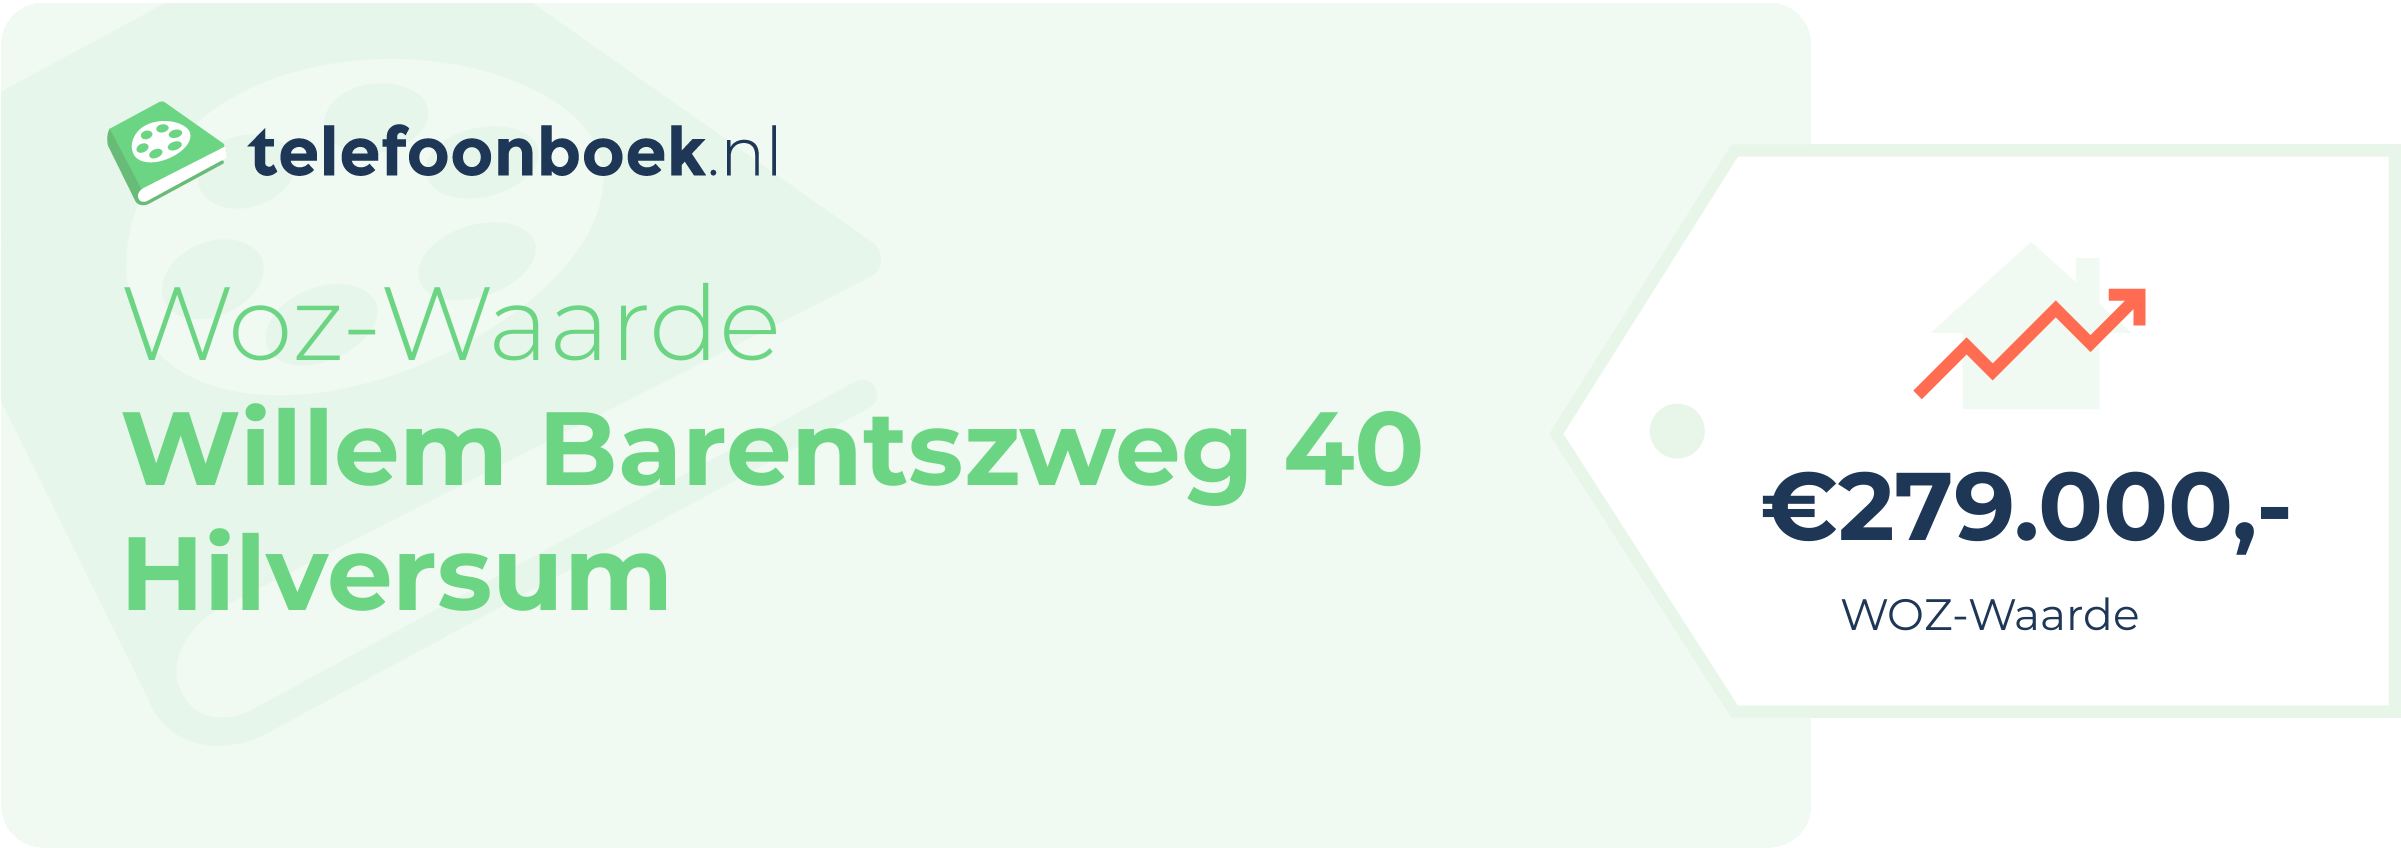 WOZ-waarde Willem Barentszweg 40 Hilversum